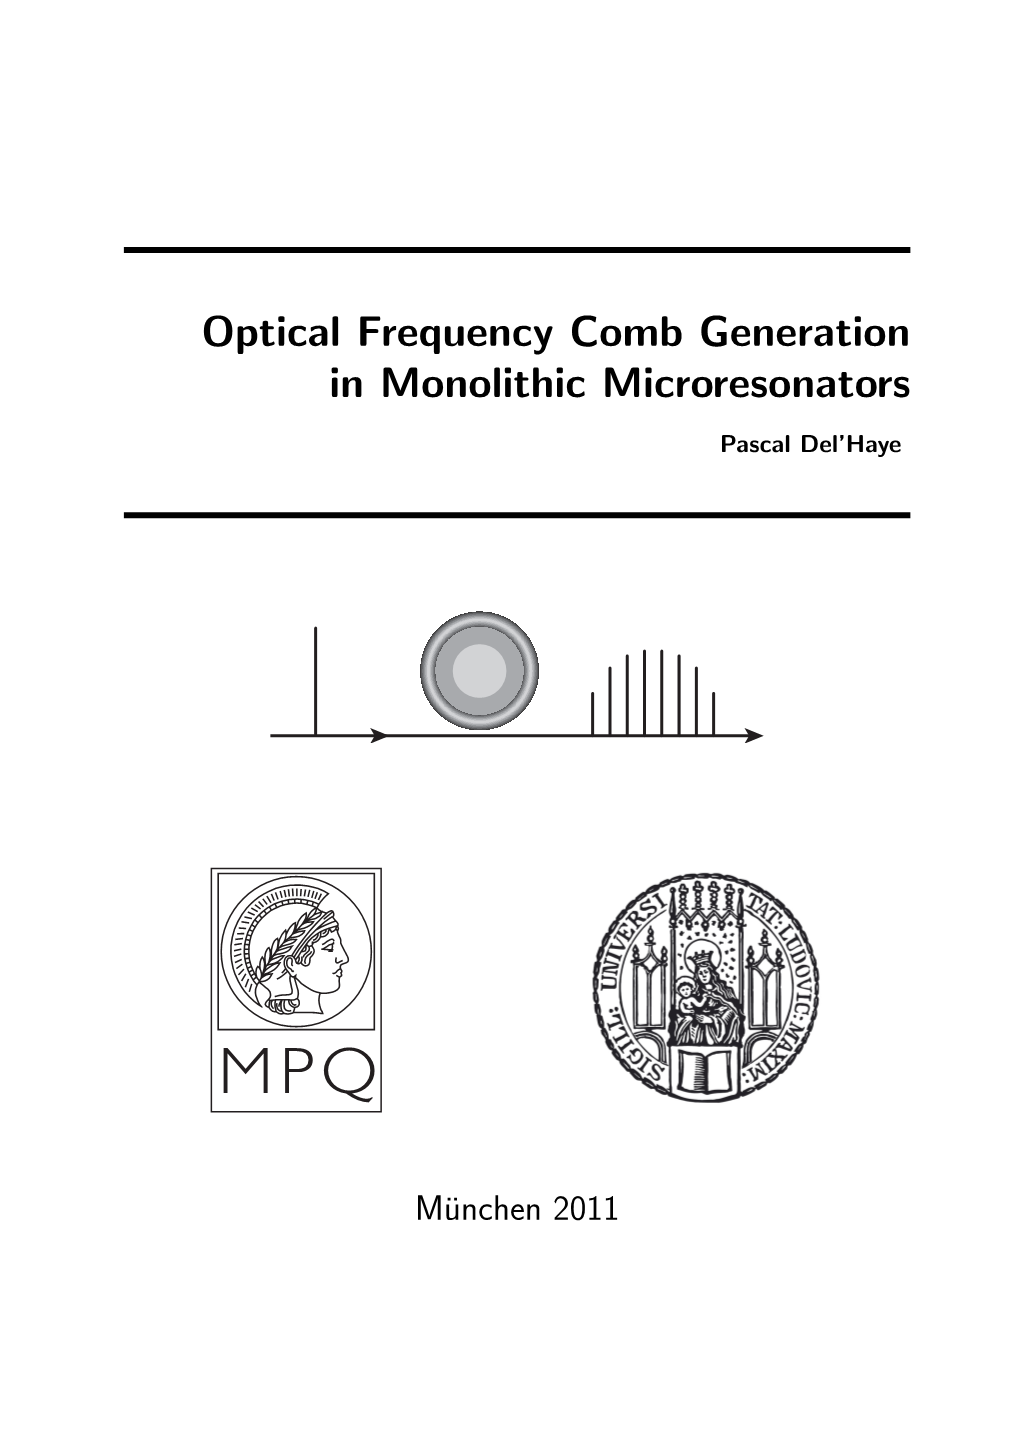 Optical Frequency Comb Generation in Monolithic Microresonators